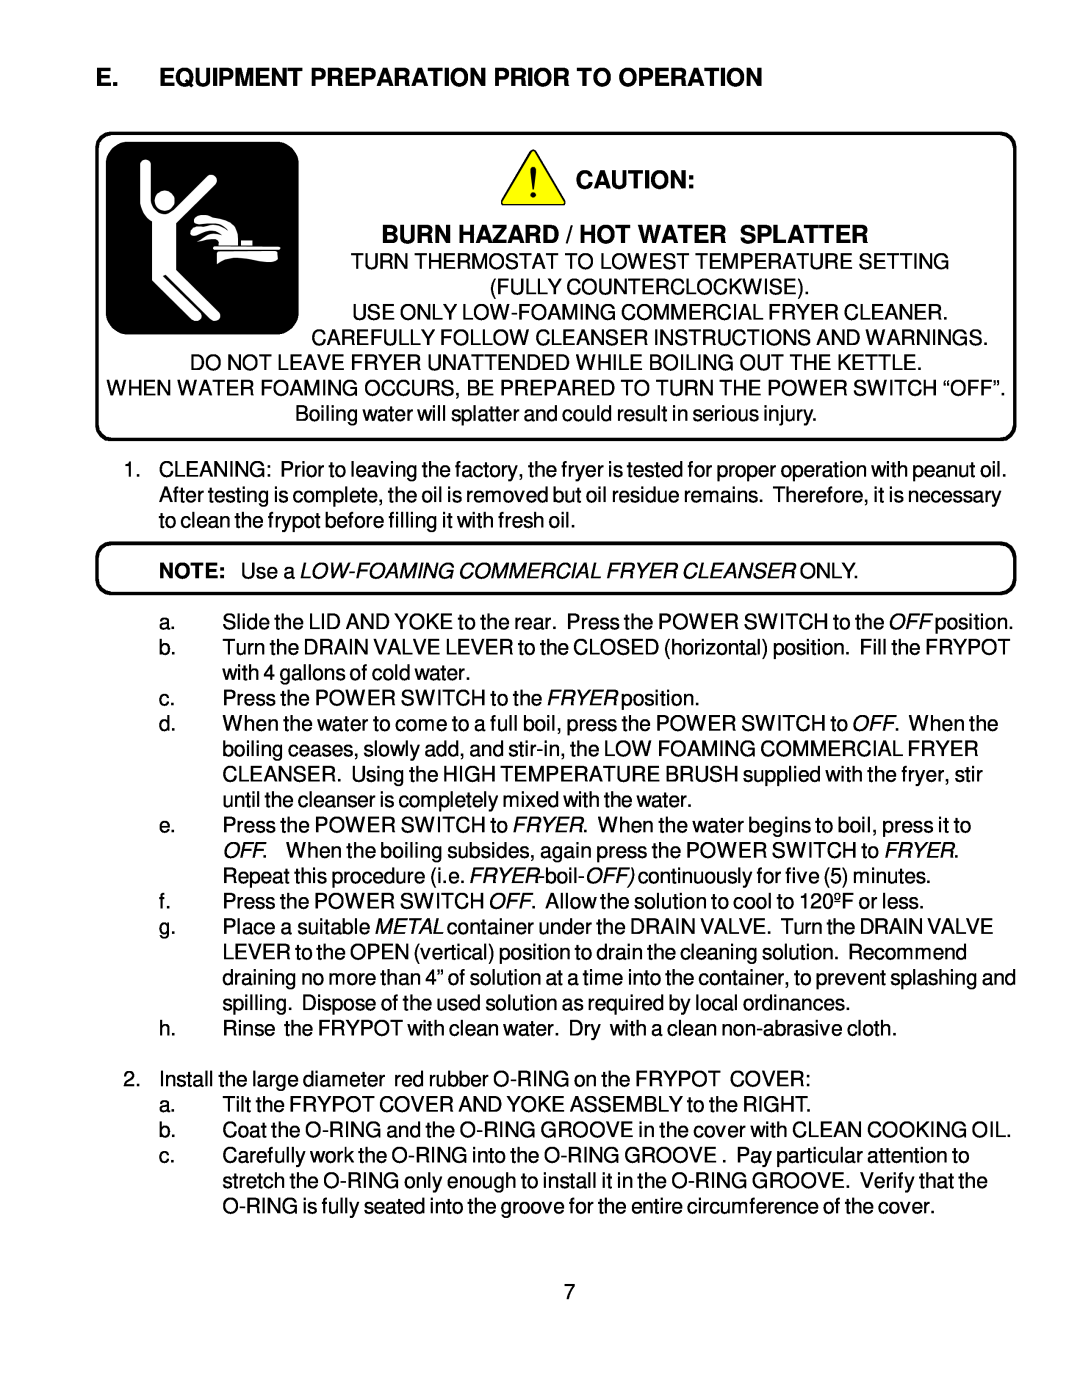 Bloomfield WFPE-30F manual E. Equipment Preparation Prior To Operation, Burn Hazard / Hot Water Splatter 